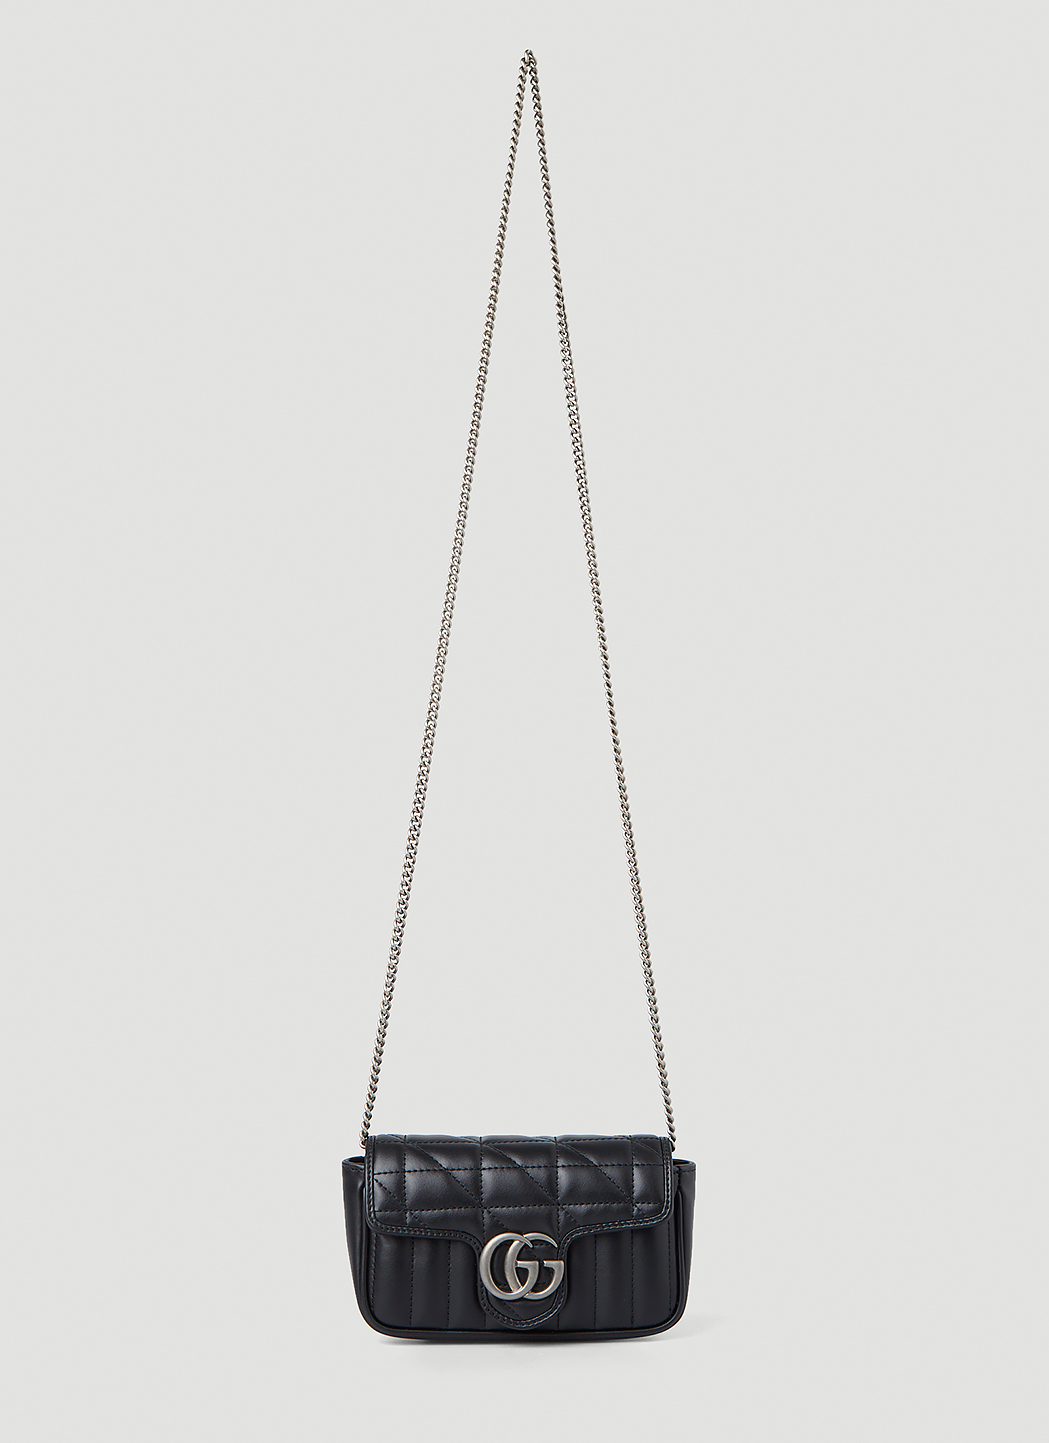 Gucci GG Marmont Matelasse Super Mini Bag White in Leather with